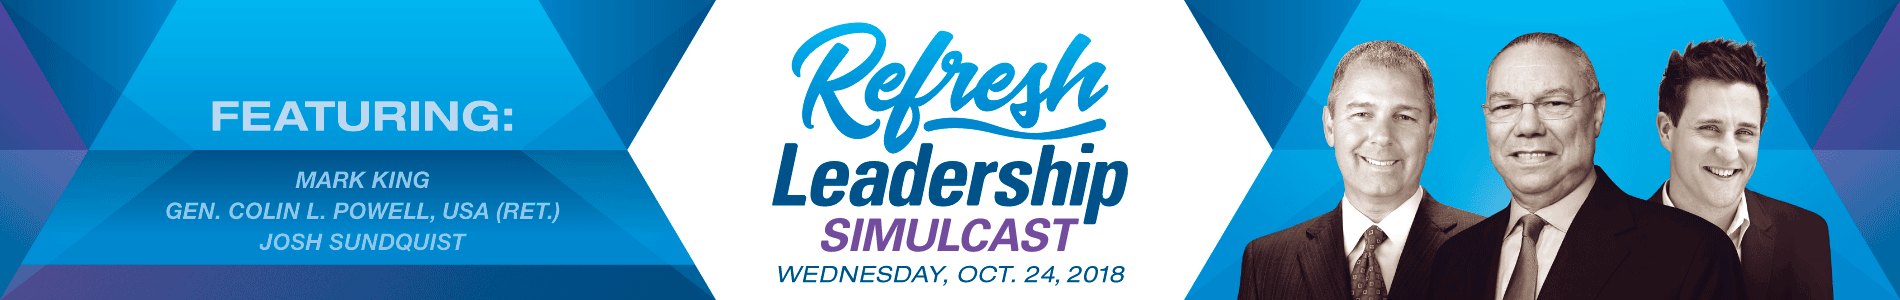 Refresh Leadership Simulcast 2018 - Grand Rapids MI - Banner